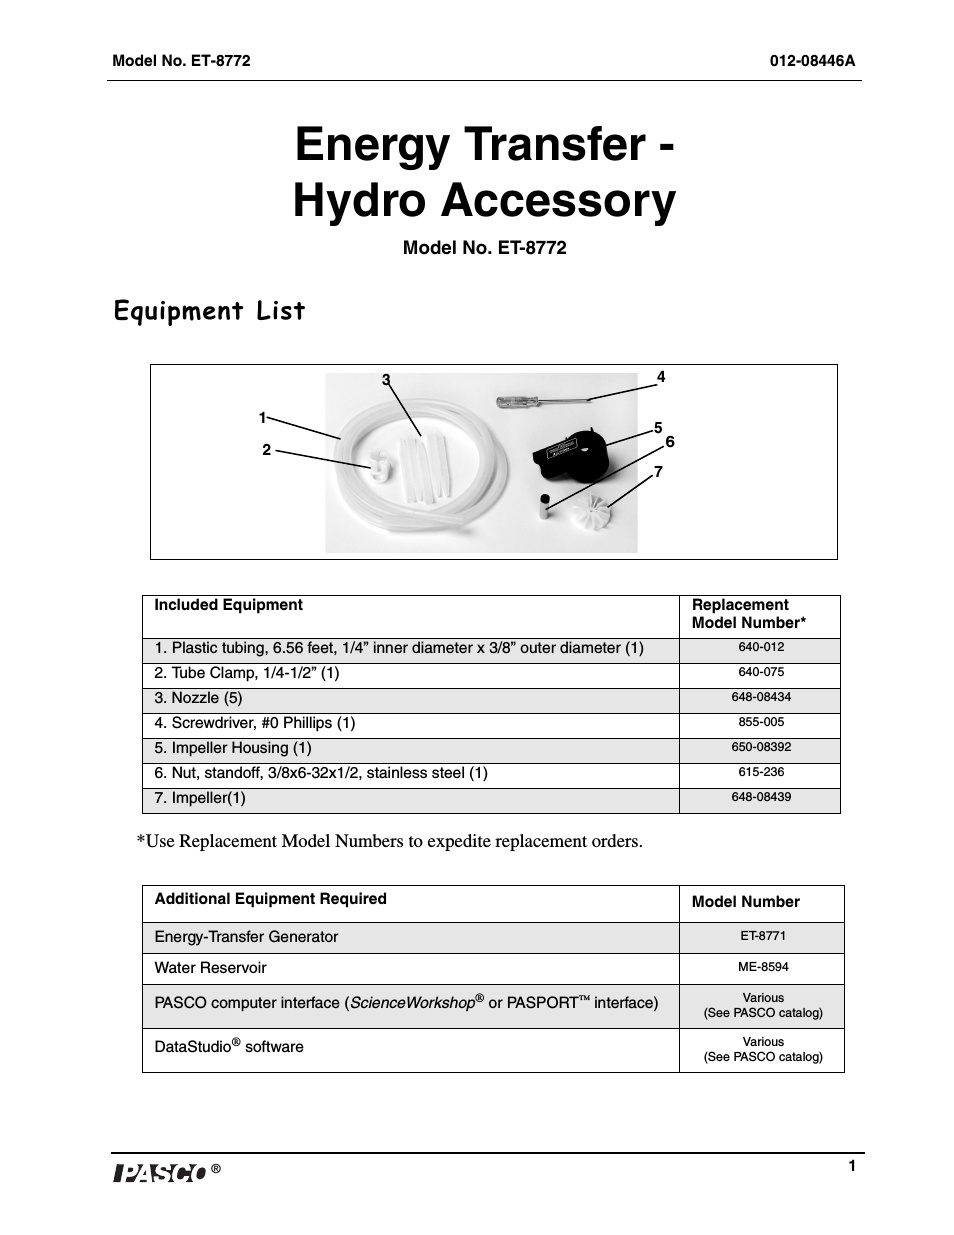 ET-8772 Energy Transfer - Hydro Accessory